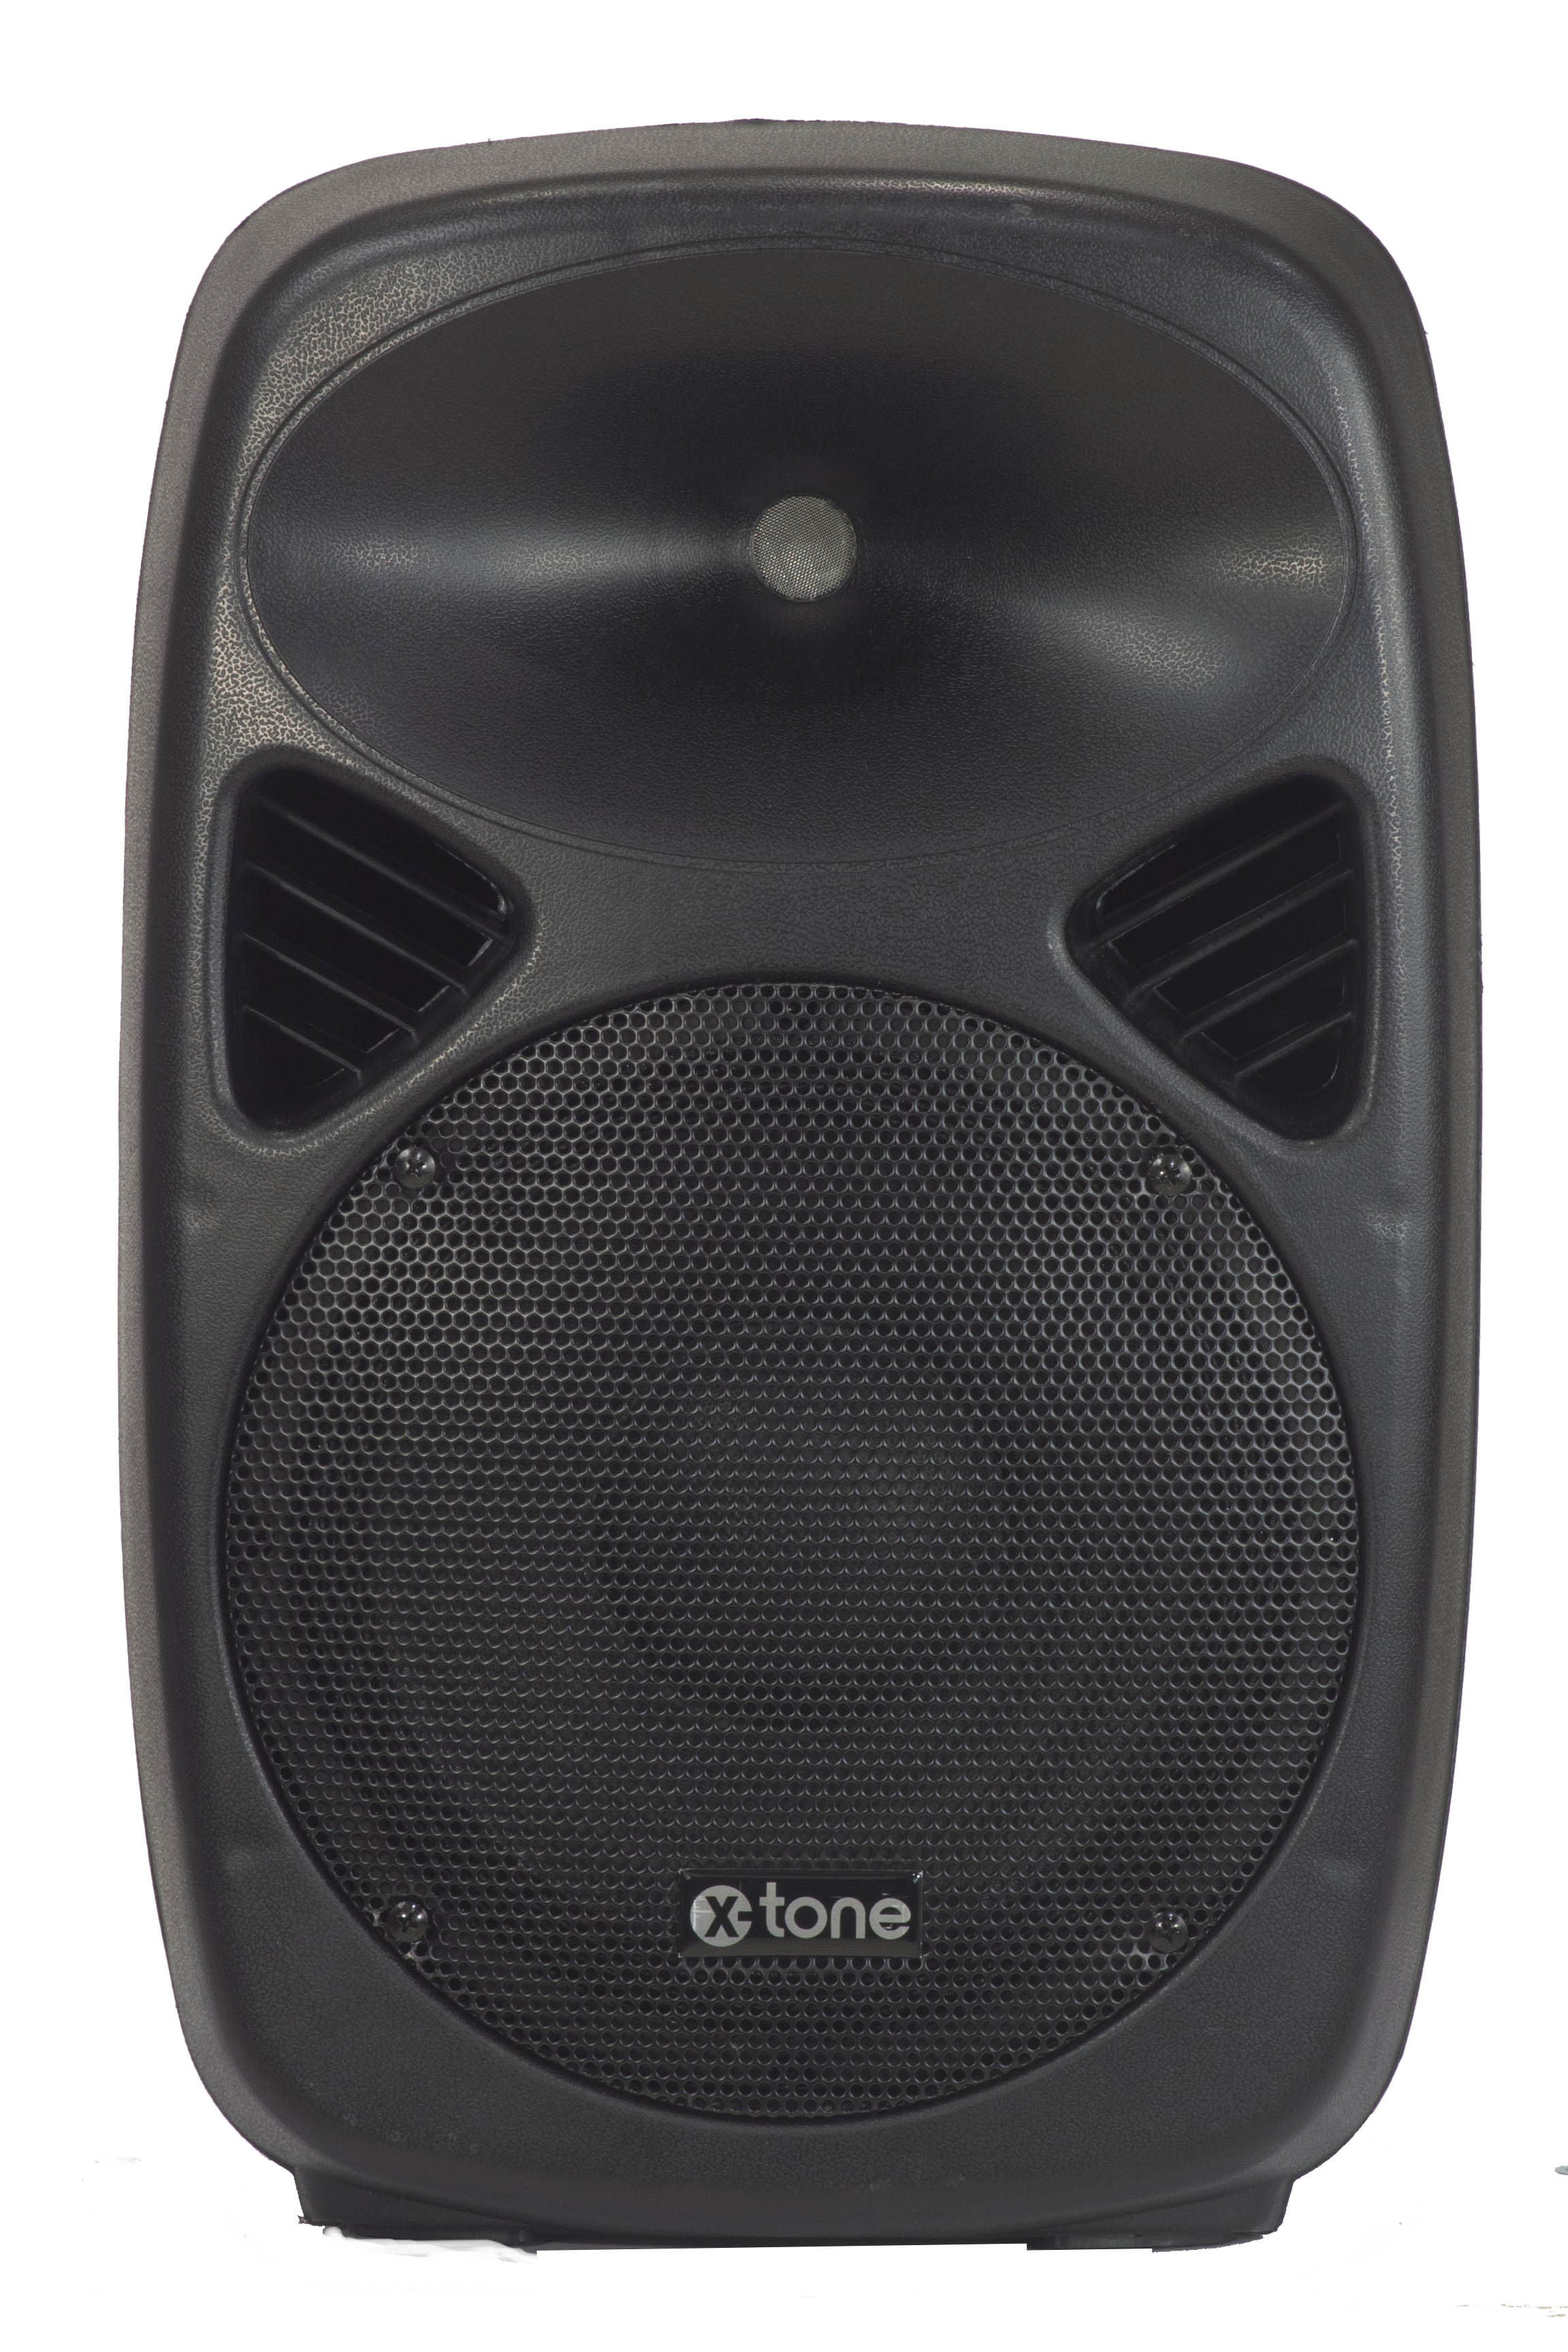 X-tone Sma-8 - Aktive Lautsprecher - Variation 2